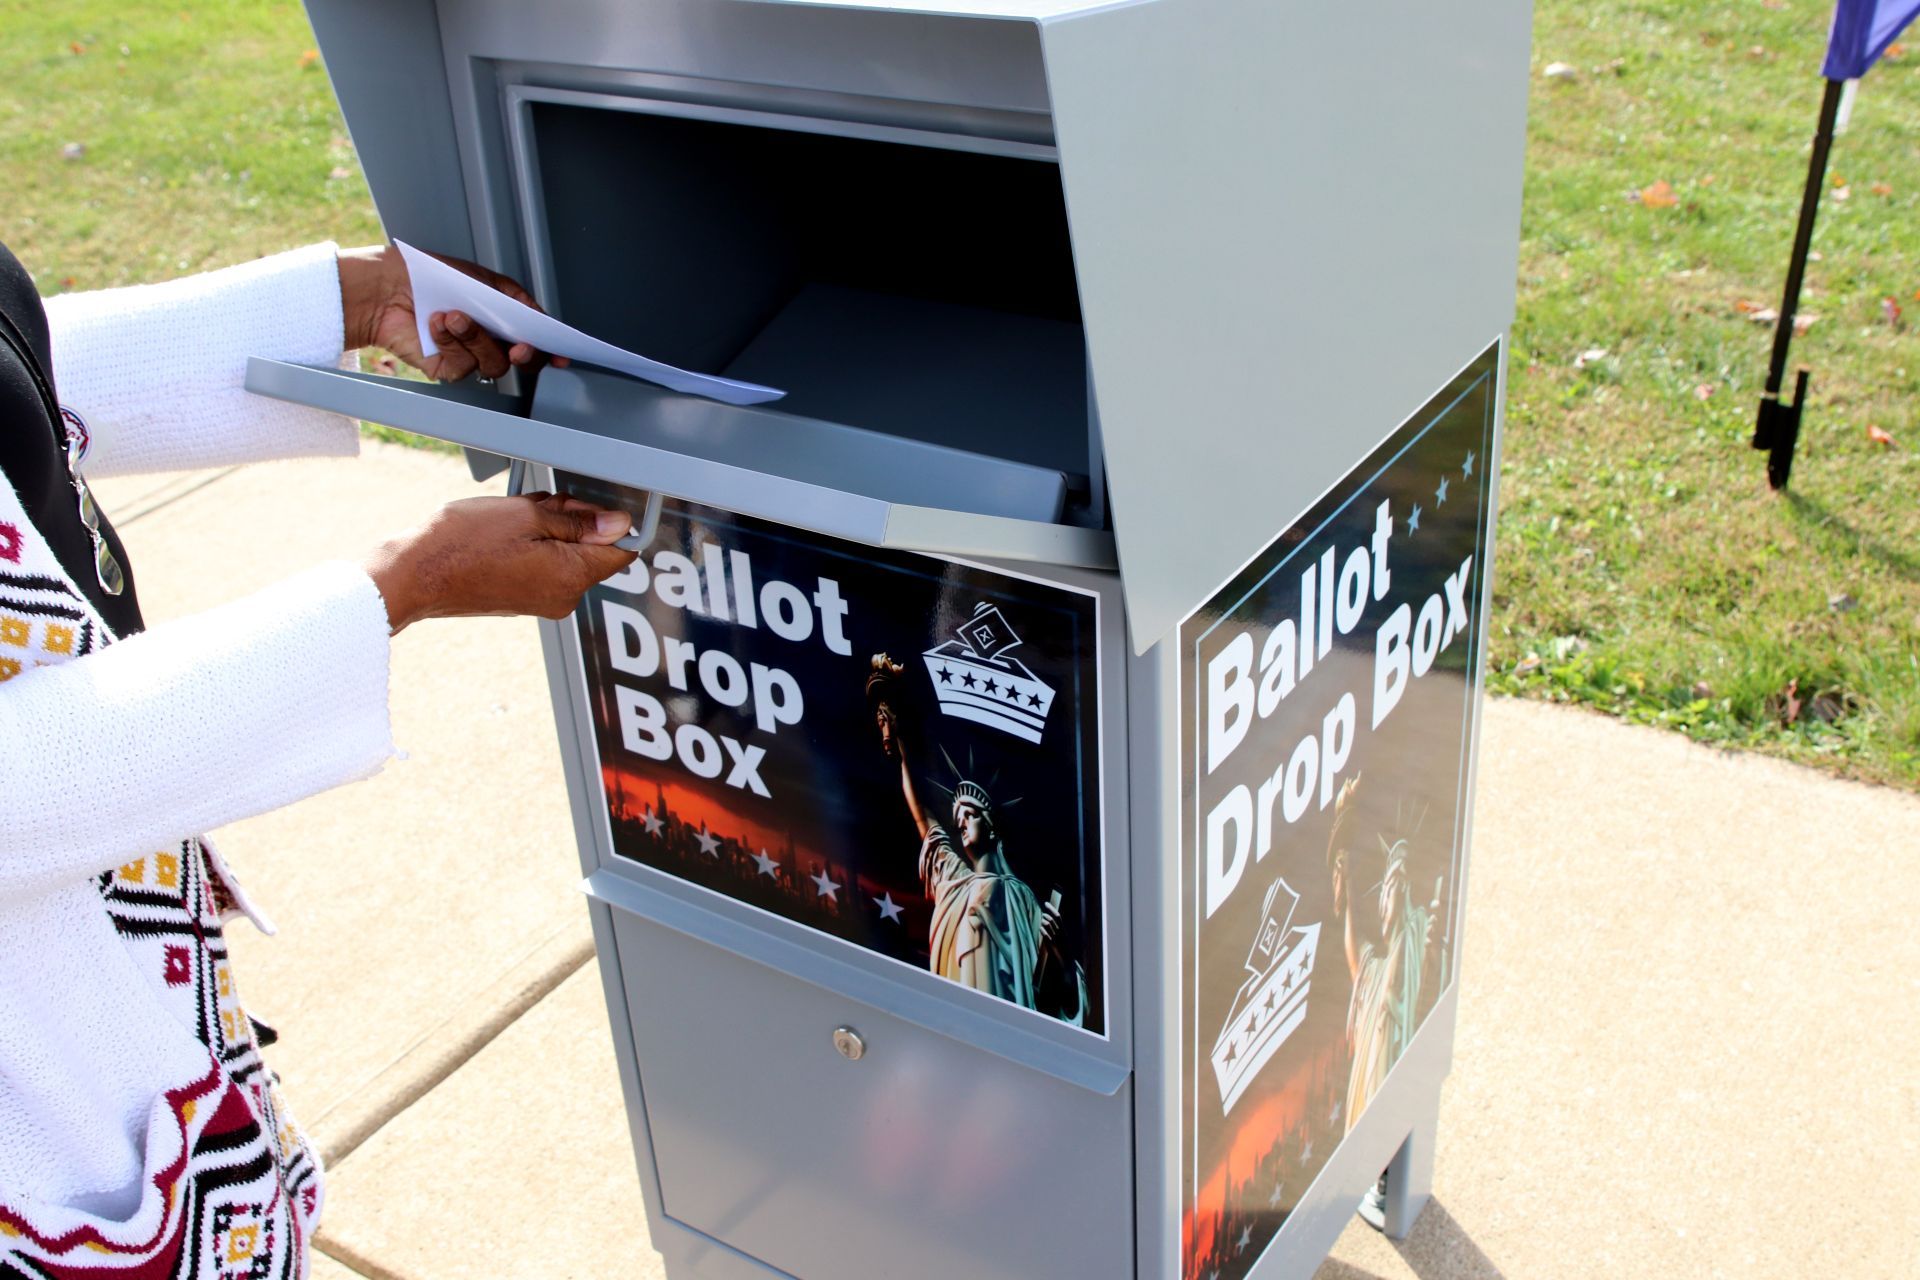 A voter drops a ballot in a drop box - Georgia voters